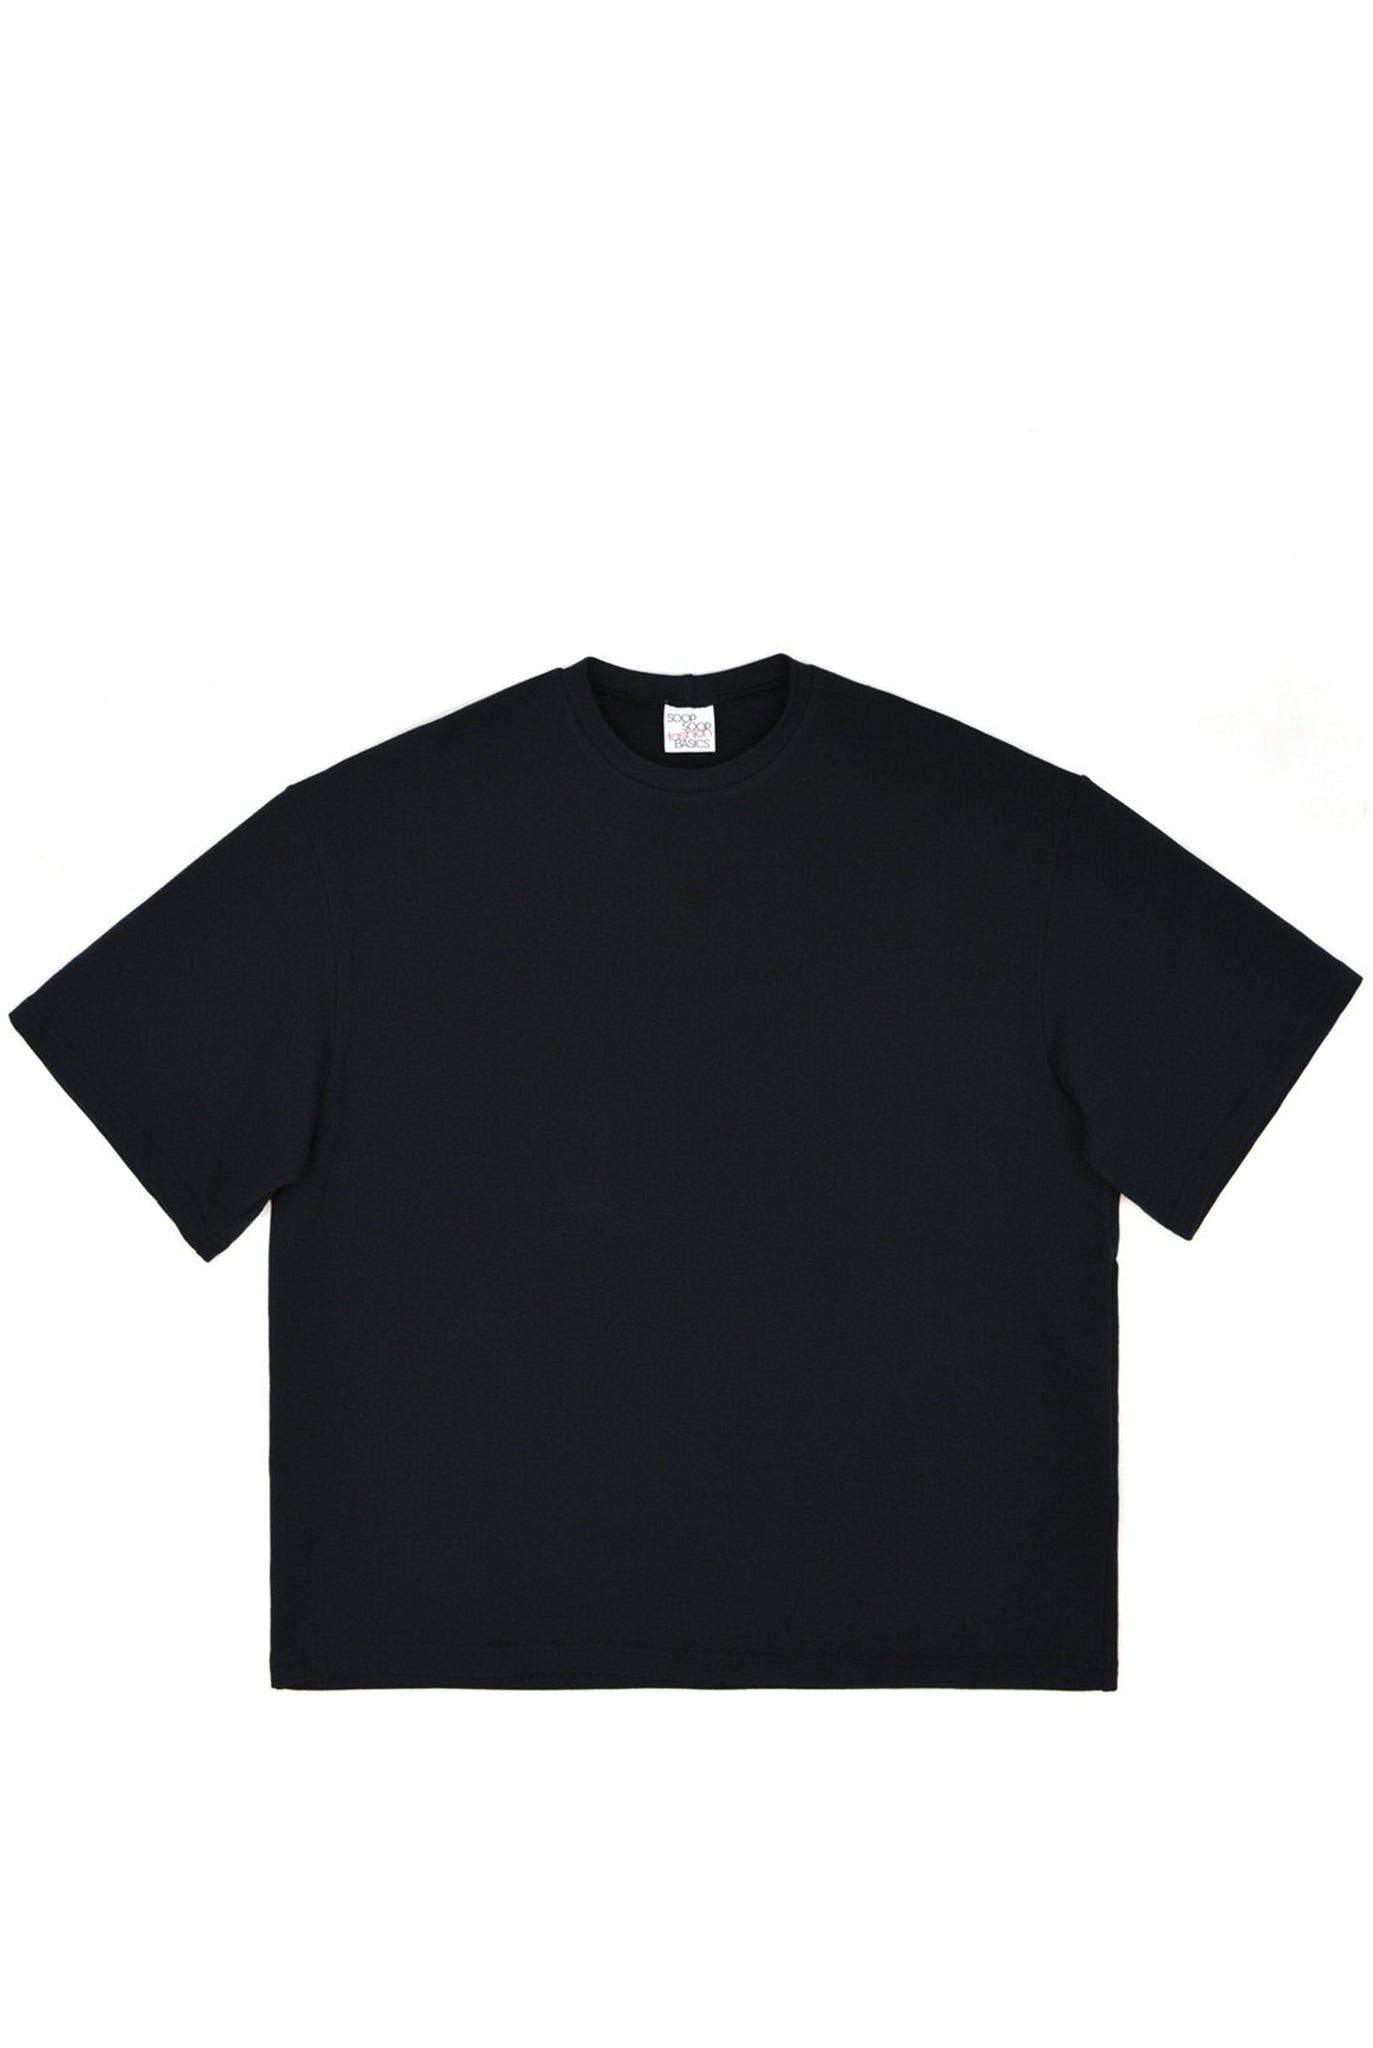 black tee shirt